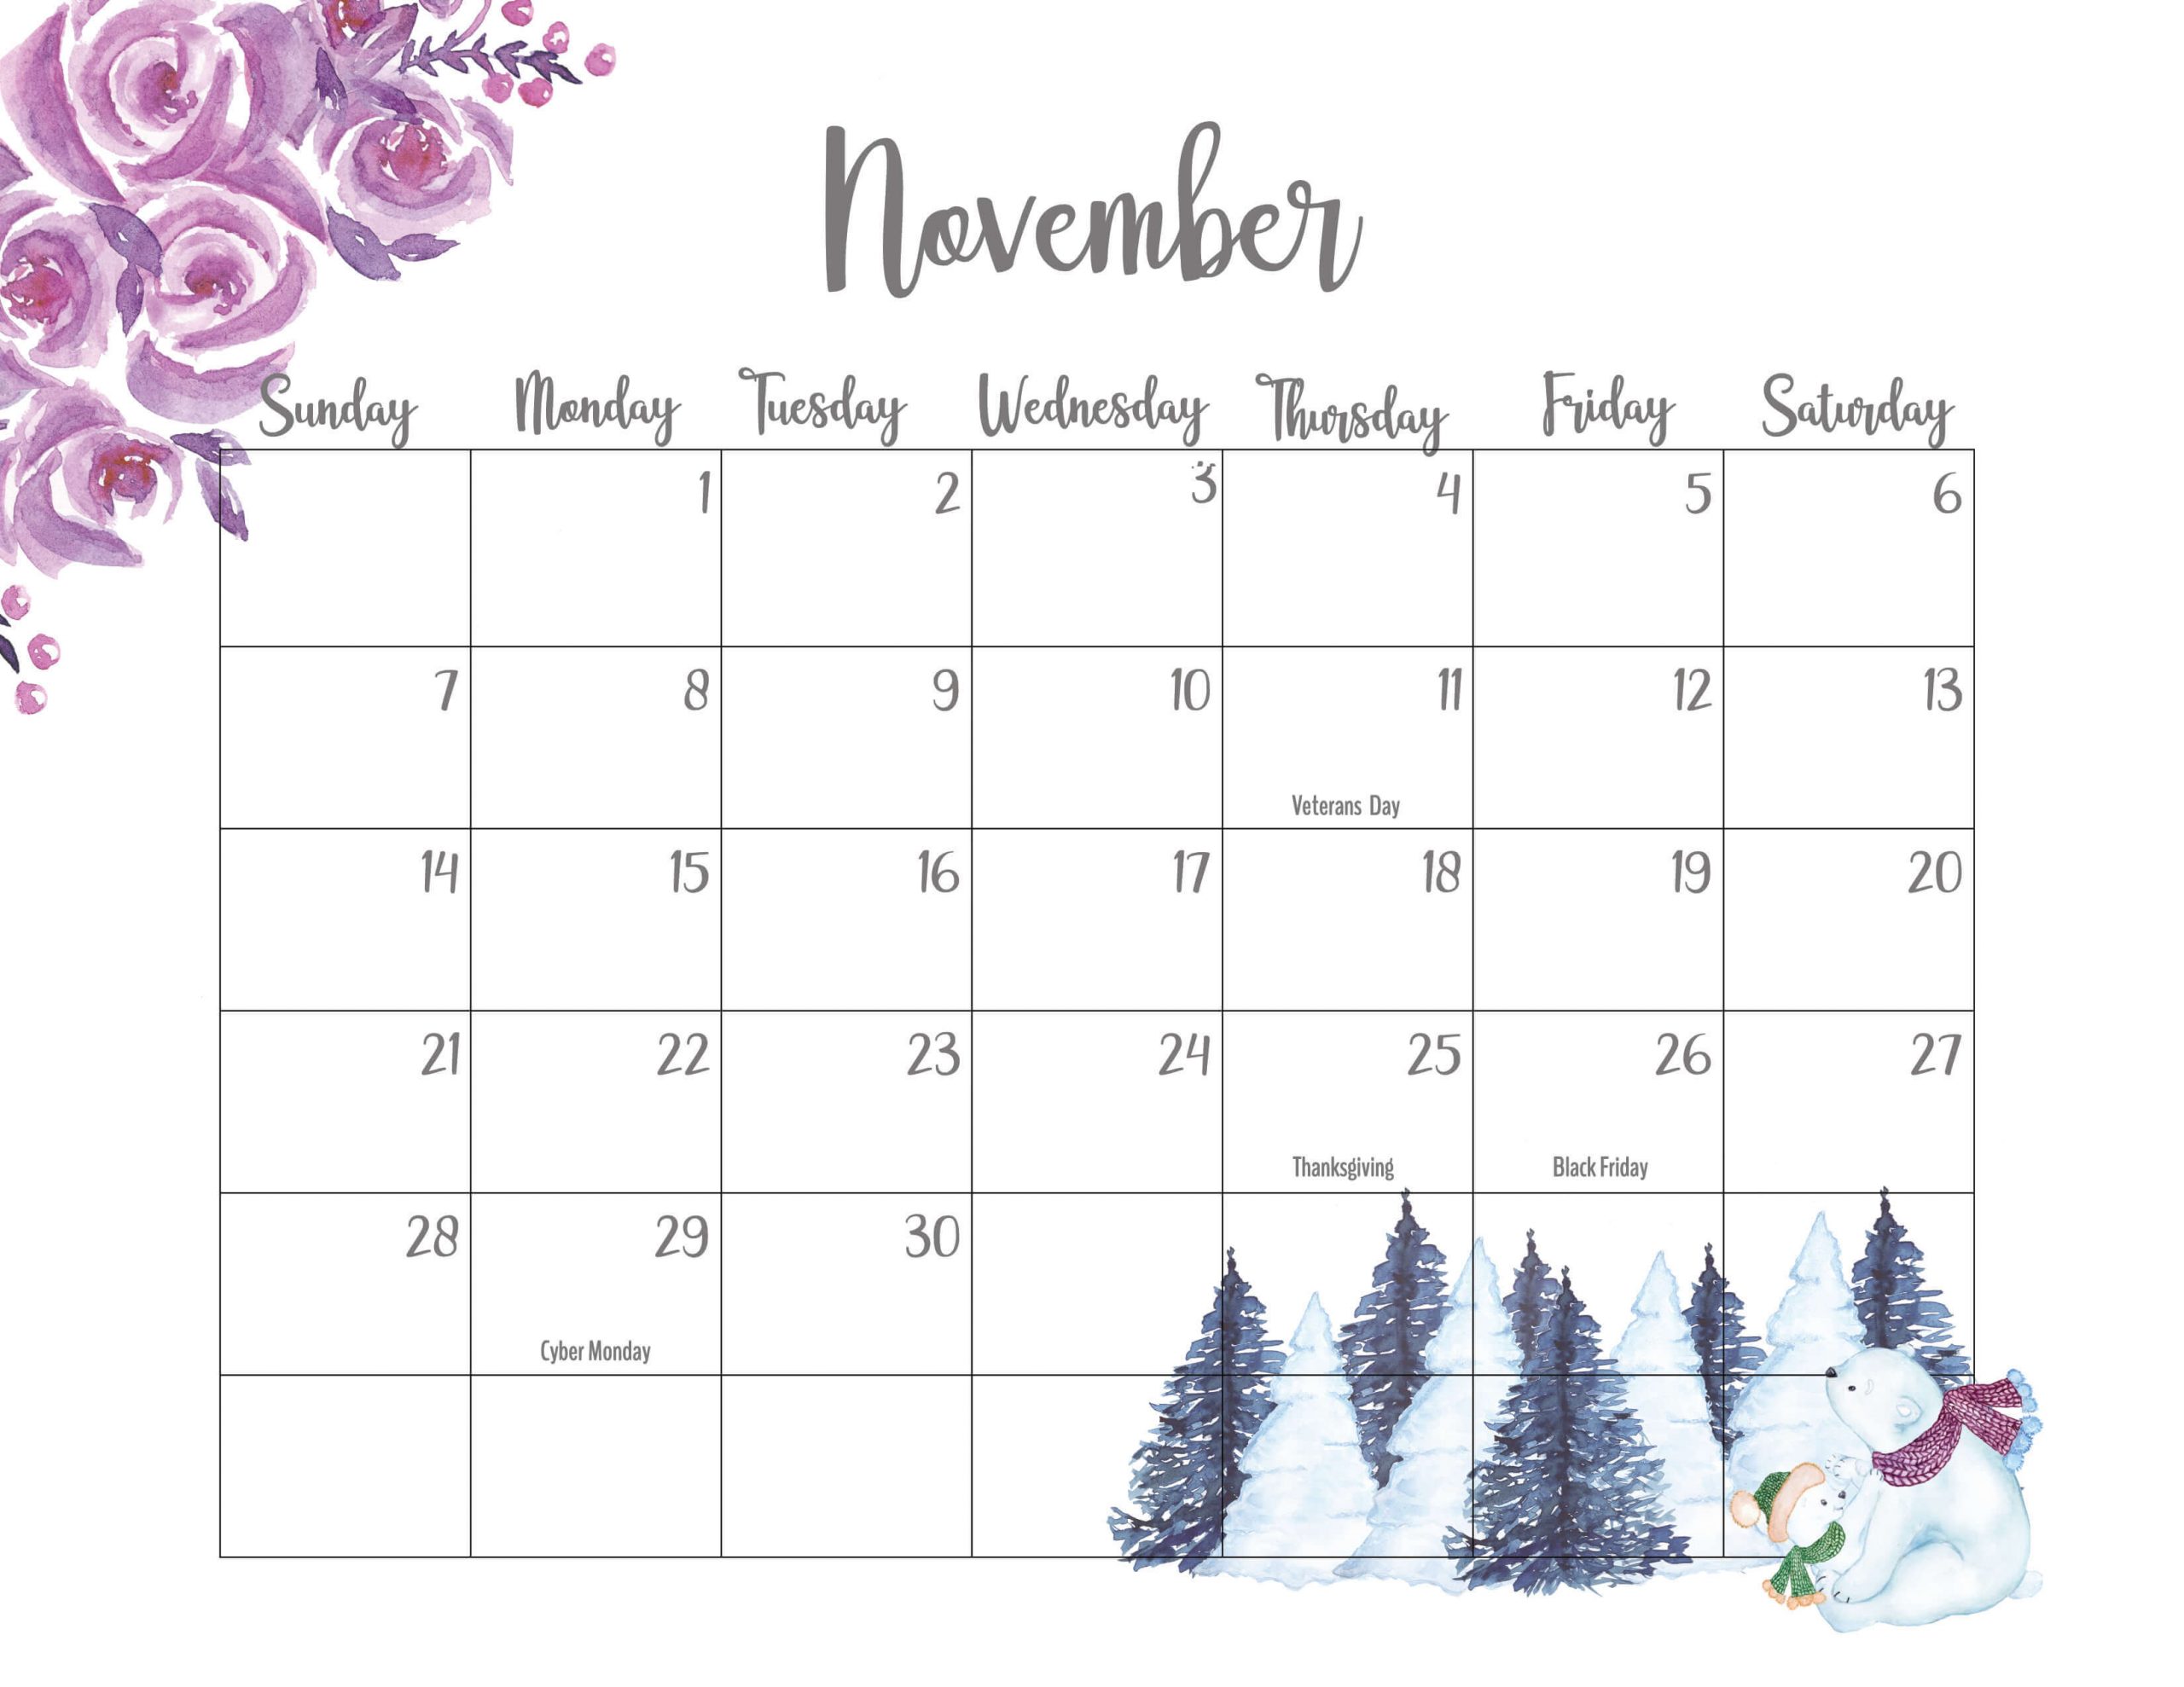 Floral November 2021 Calendar Printable - Cute Designs November 2021 Calendar Template